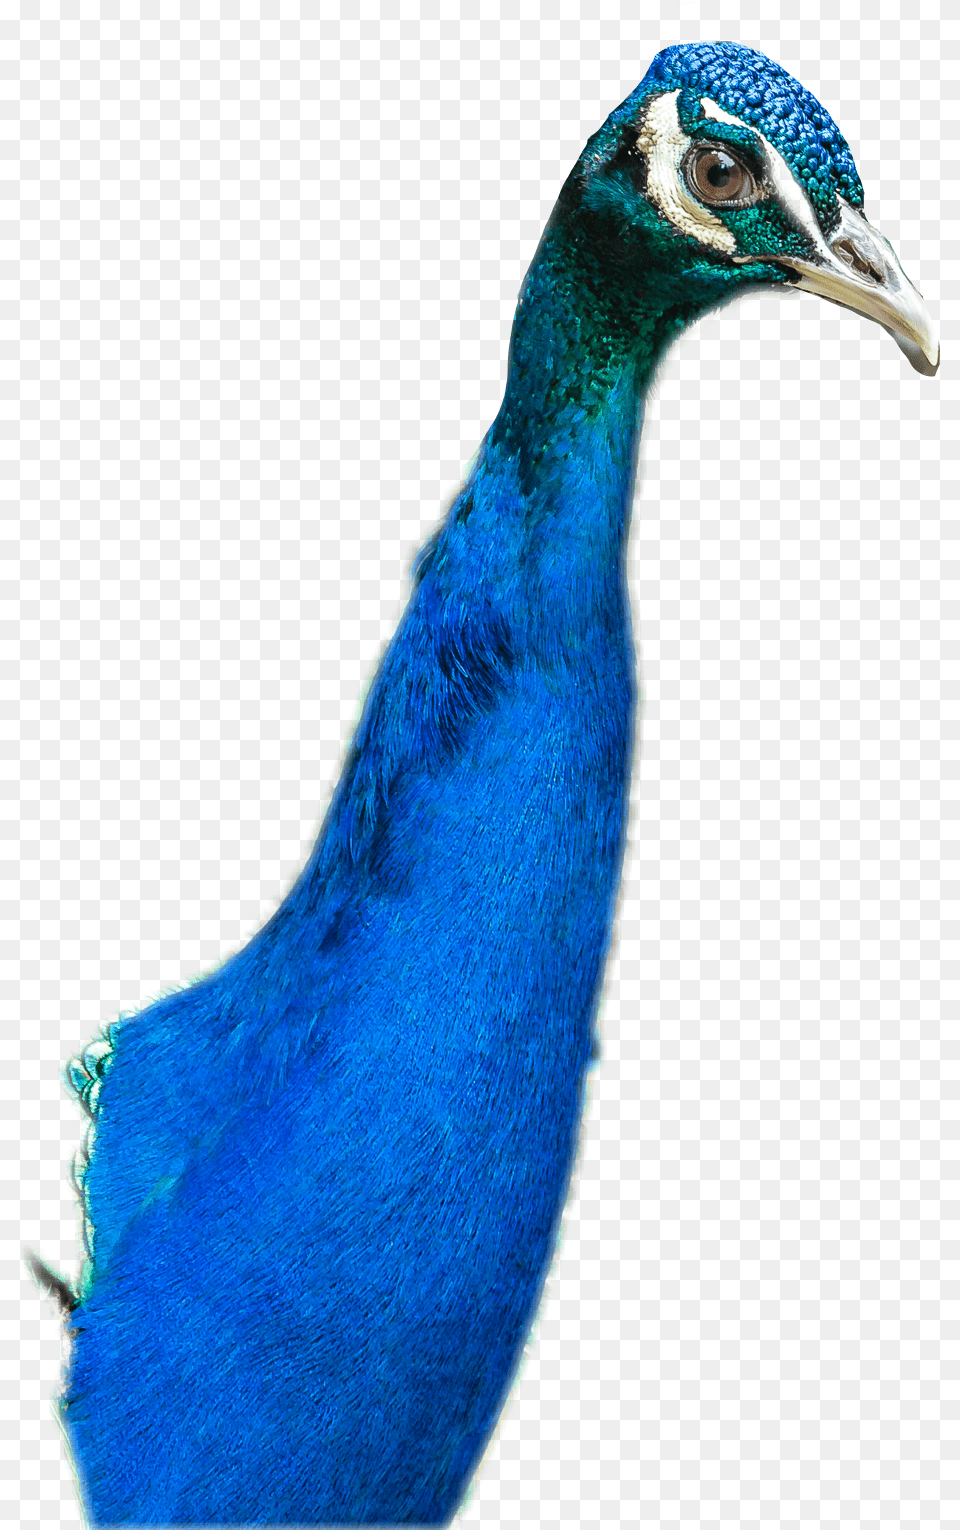 Golfinho Dolphin Vaporwave Seapunk Tumblr Aesthetic Peafowl, Animal, Bird, Peacock Png Image